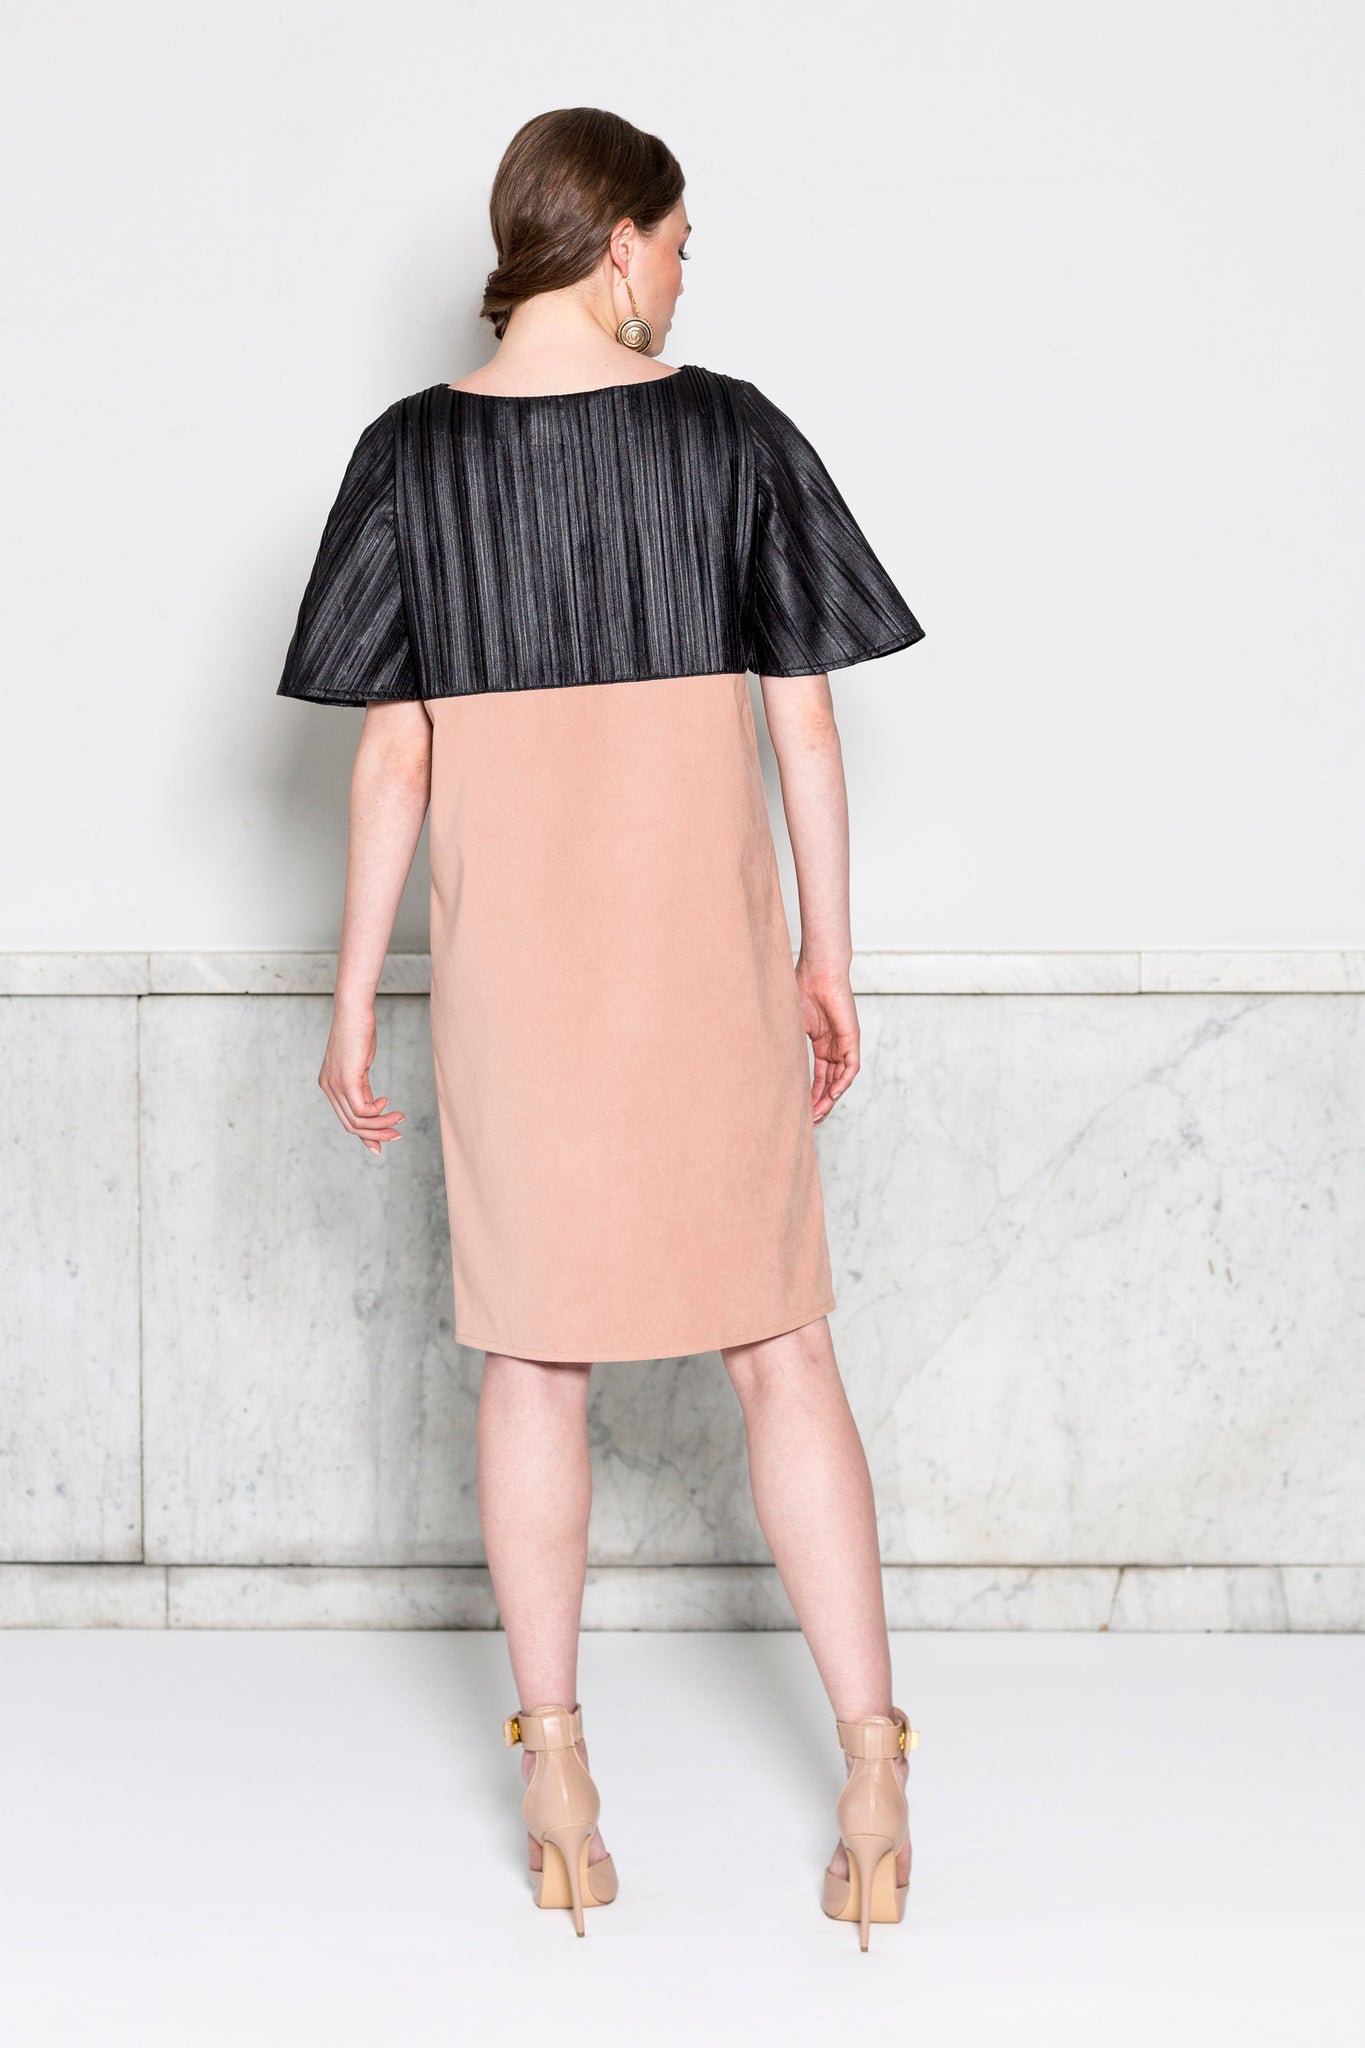 Capelet Sleeve Dress (Custom Design)